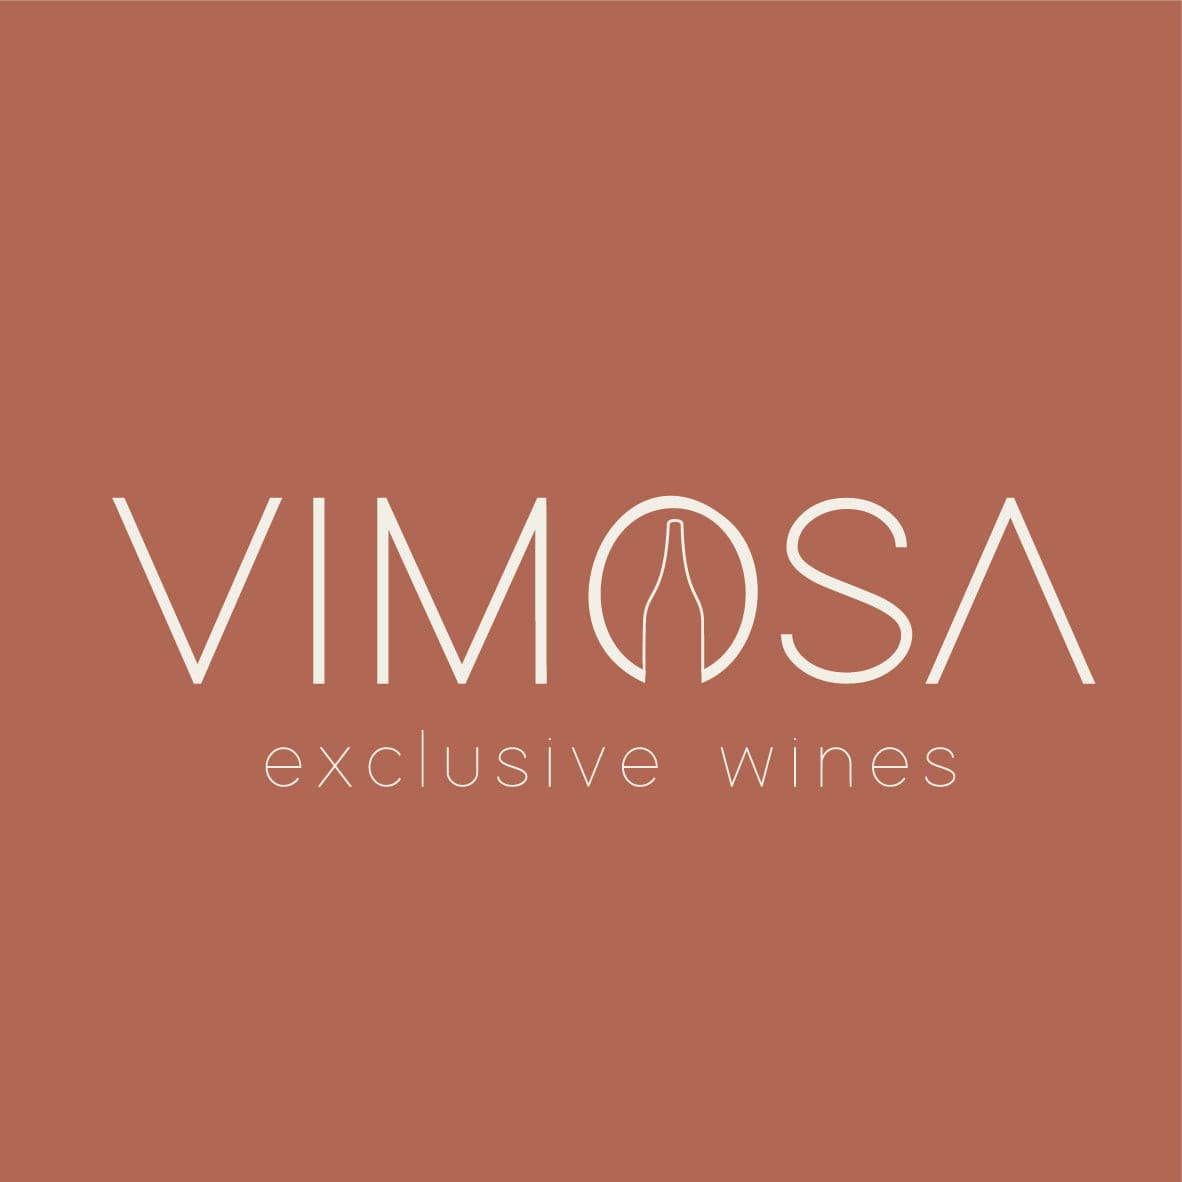 Vimosa wines gift card